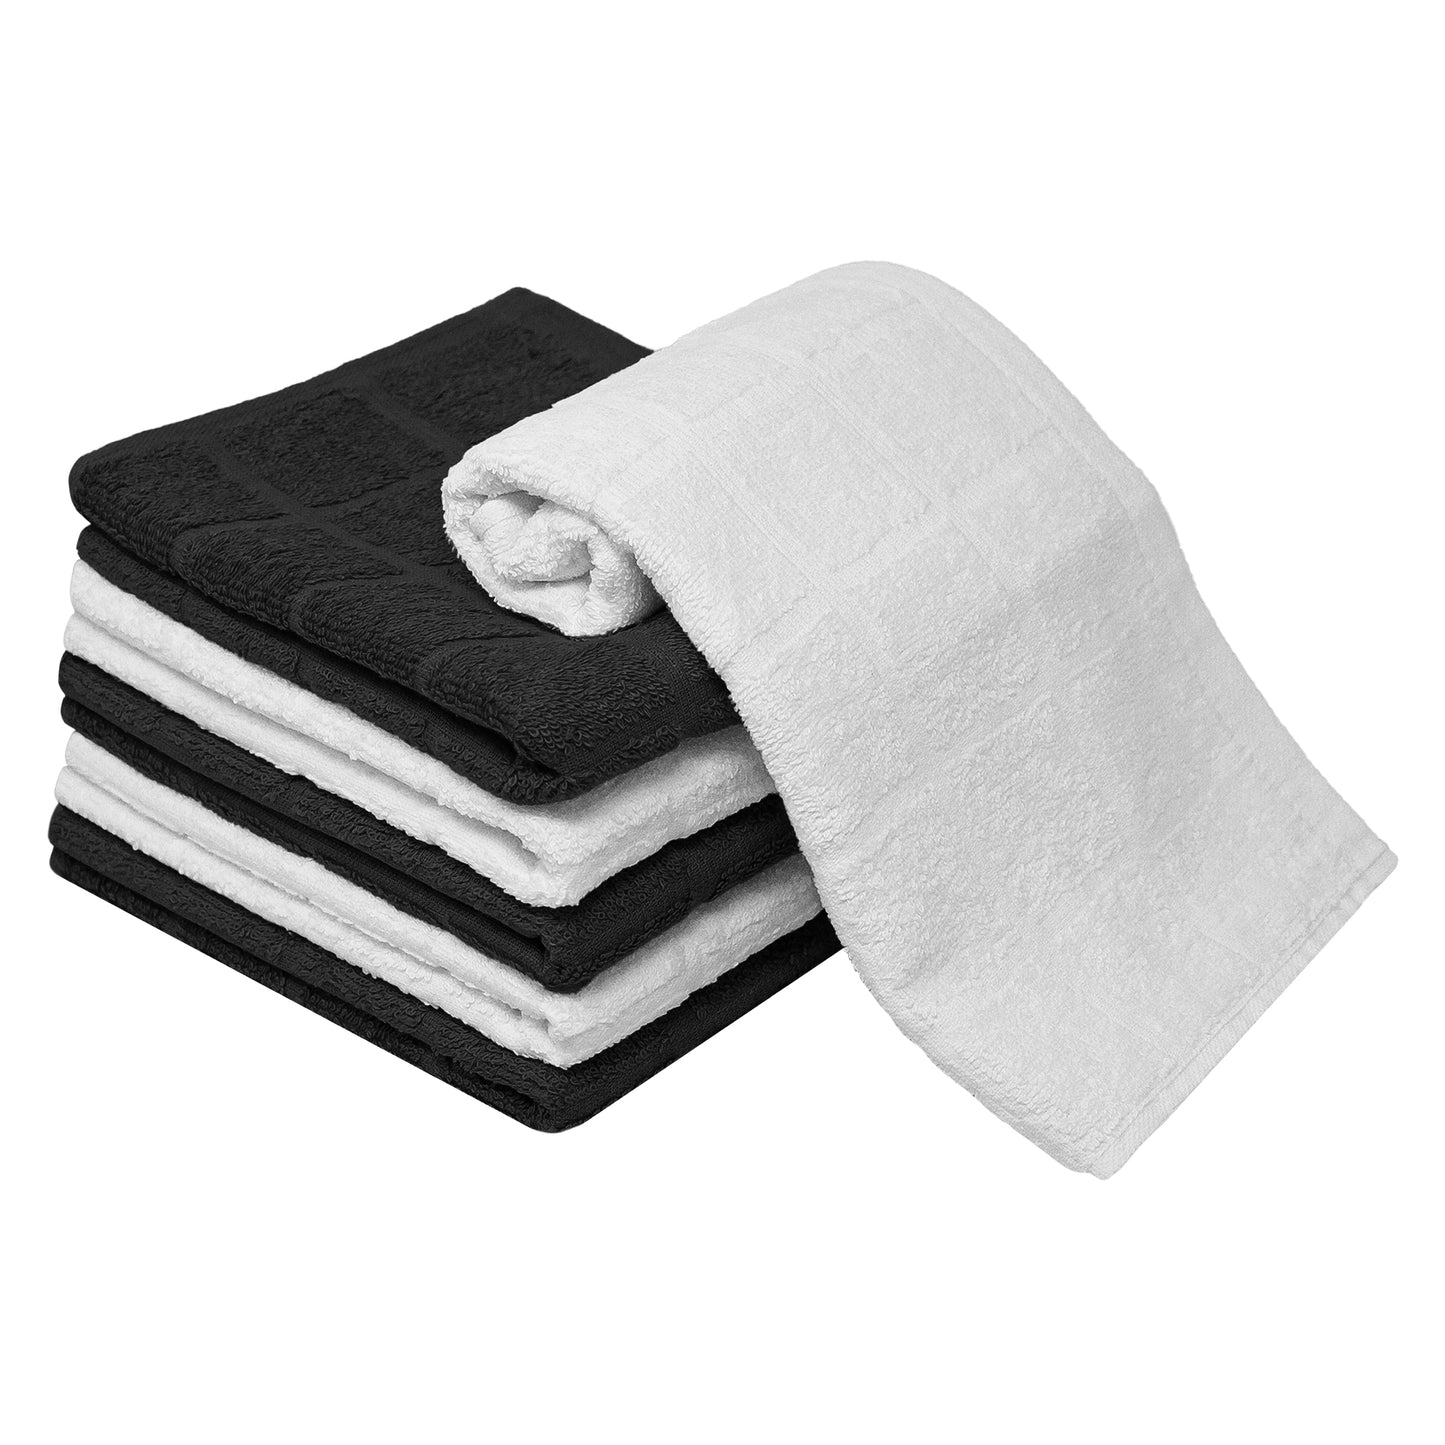 1 Pack Kitchen Towels, Microfiber Dish Towels, Super Absorbent